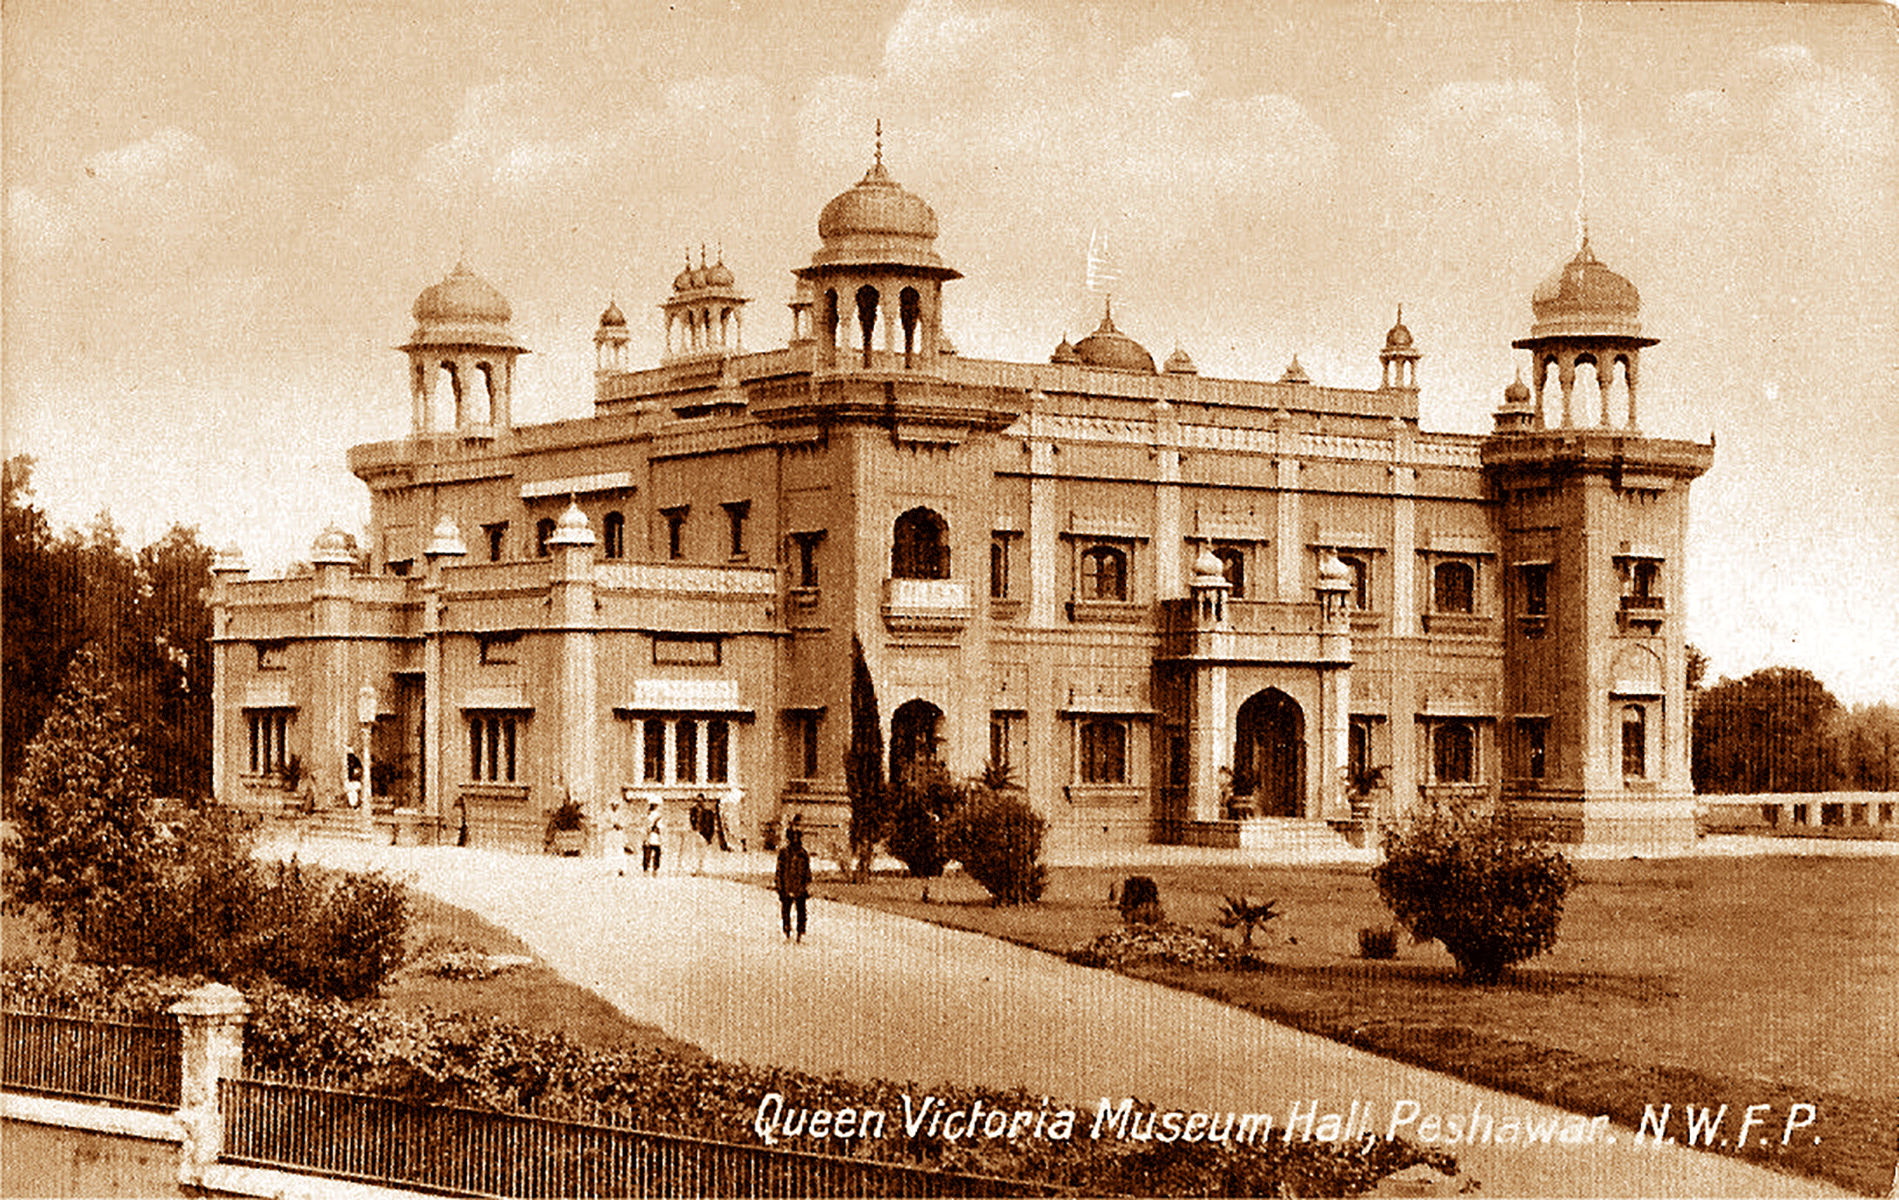 Peshawar Museum- Queen Victoria Museum Hall Post card 